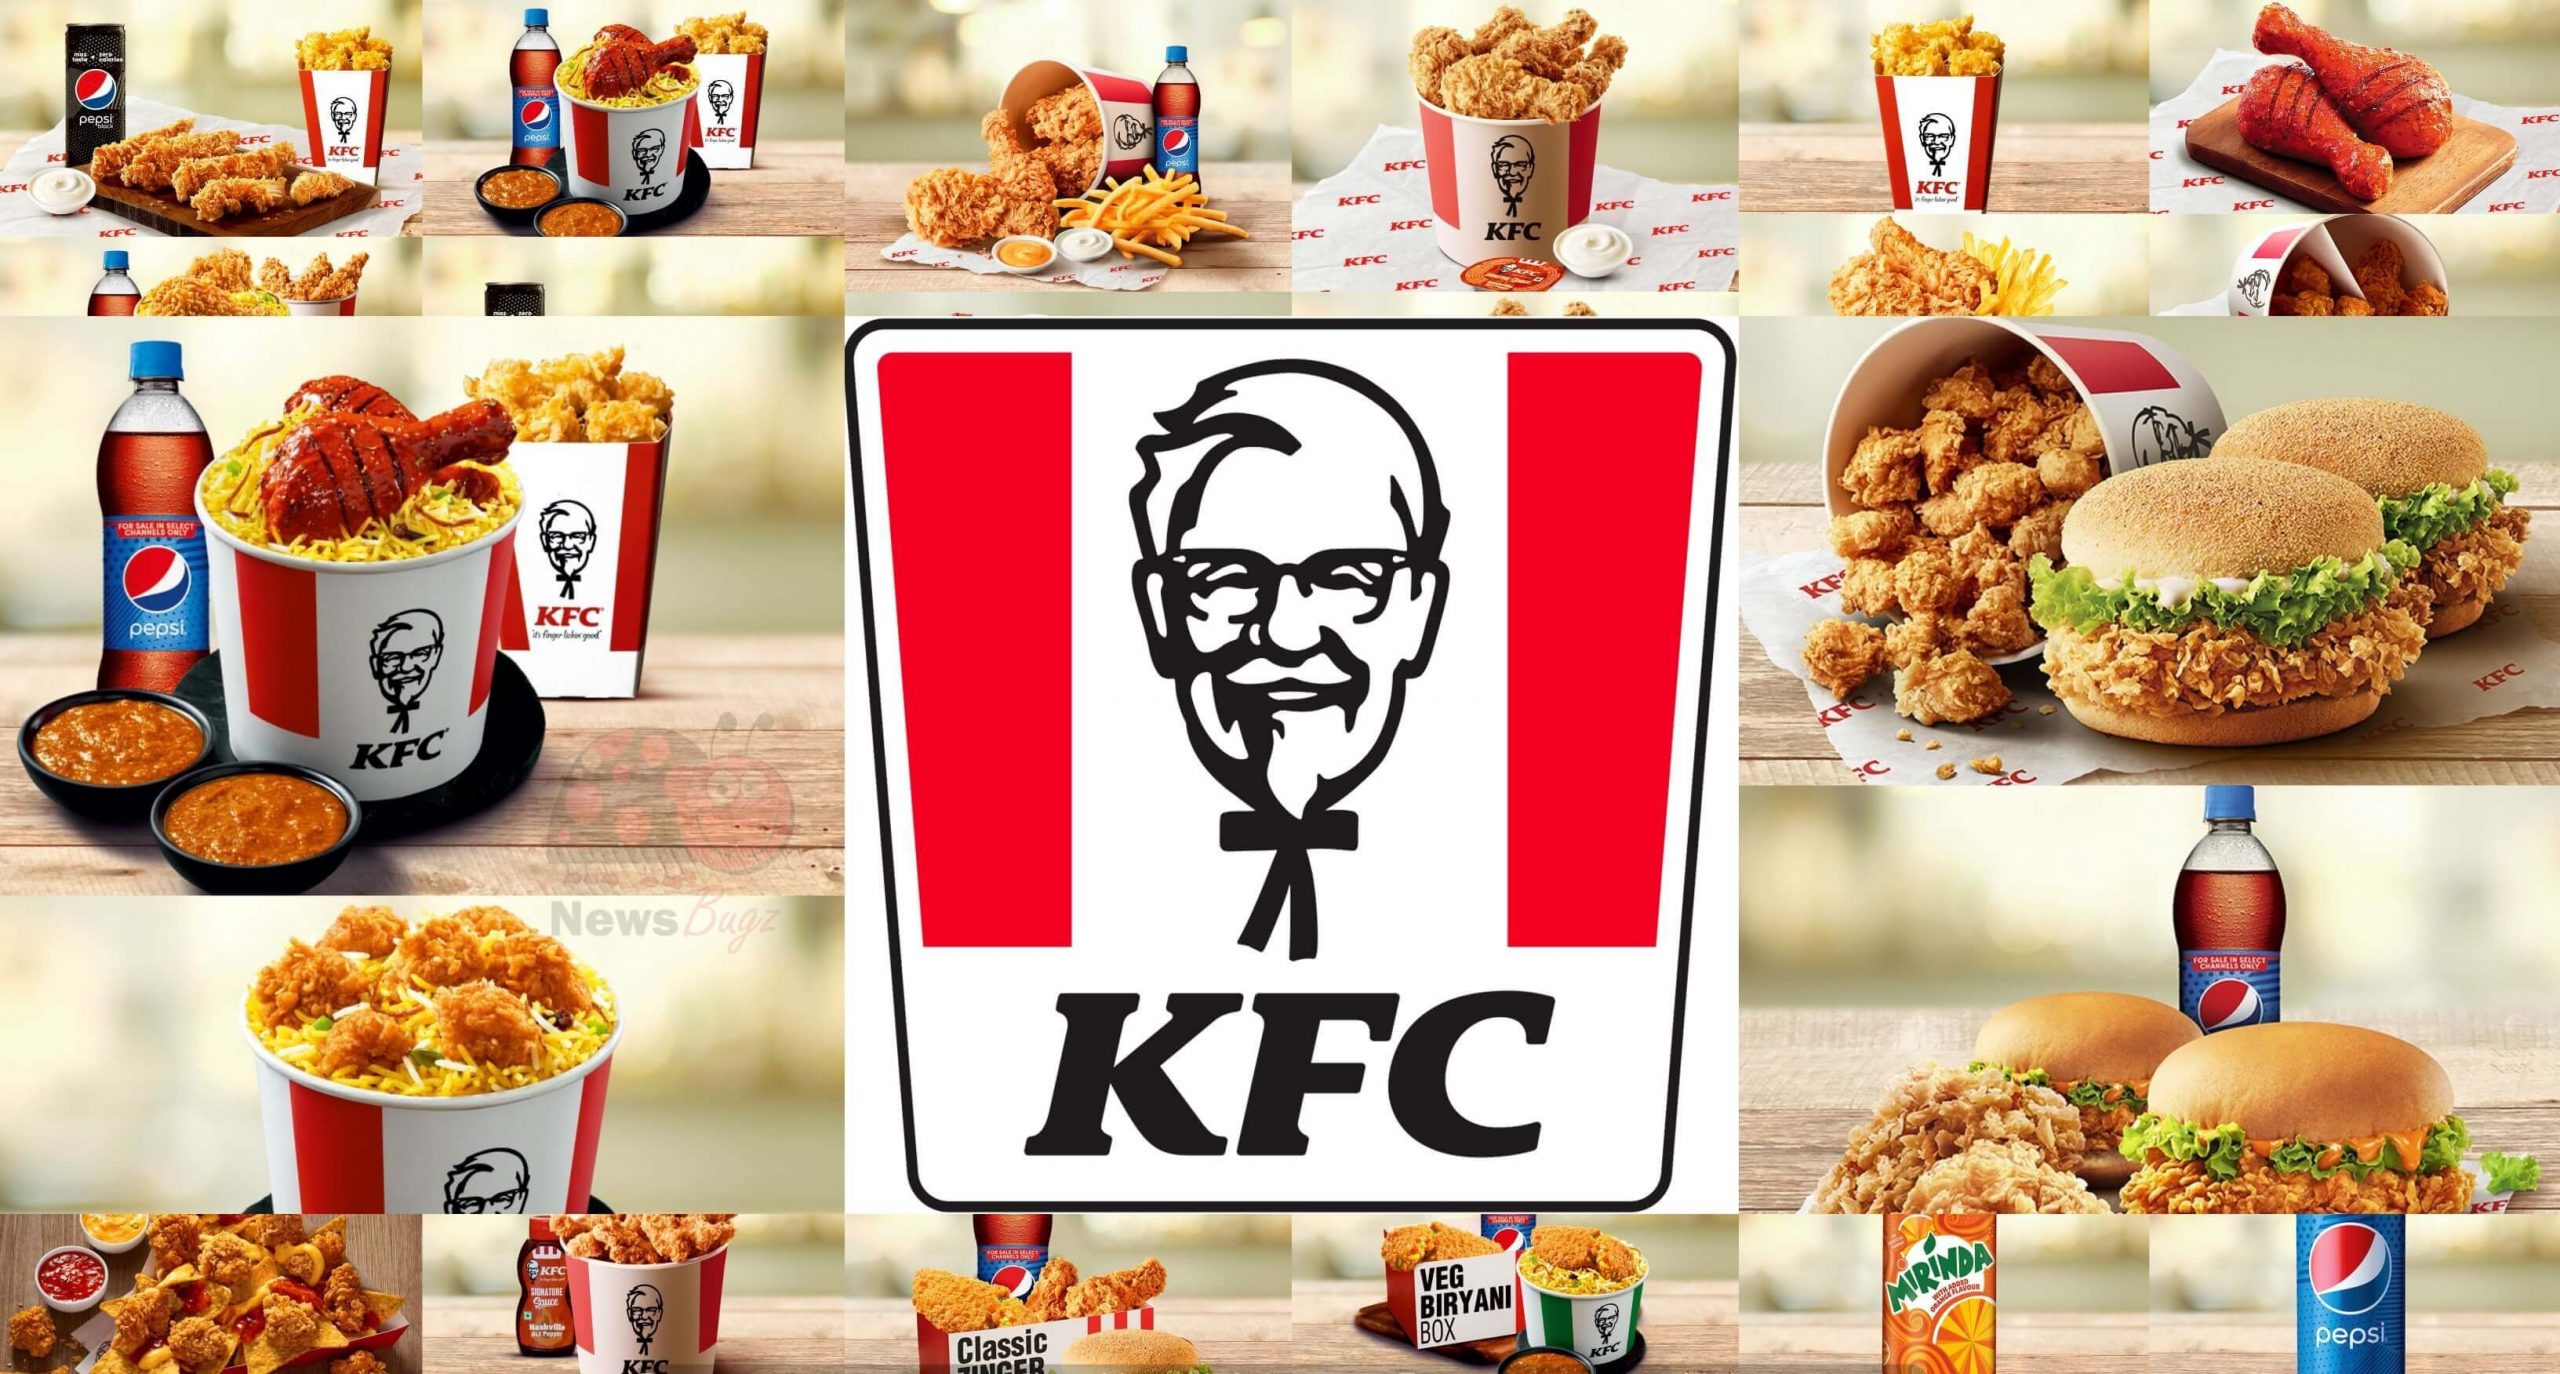 KFC Menu With Price In India (2022) - NewsBugz LifeStyle